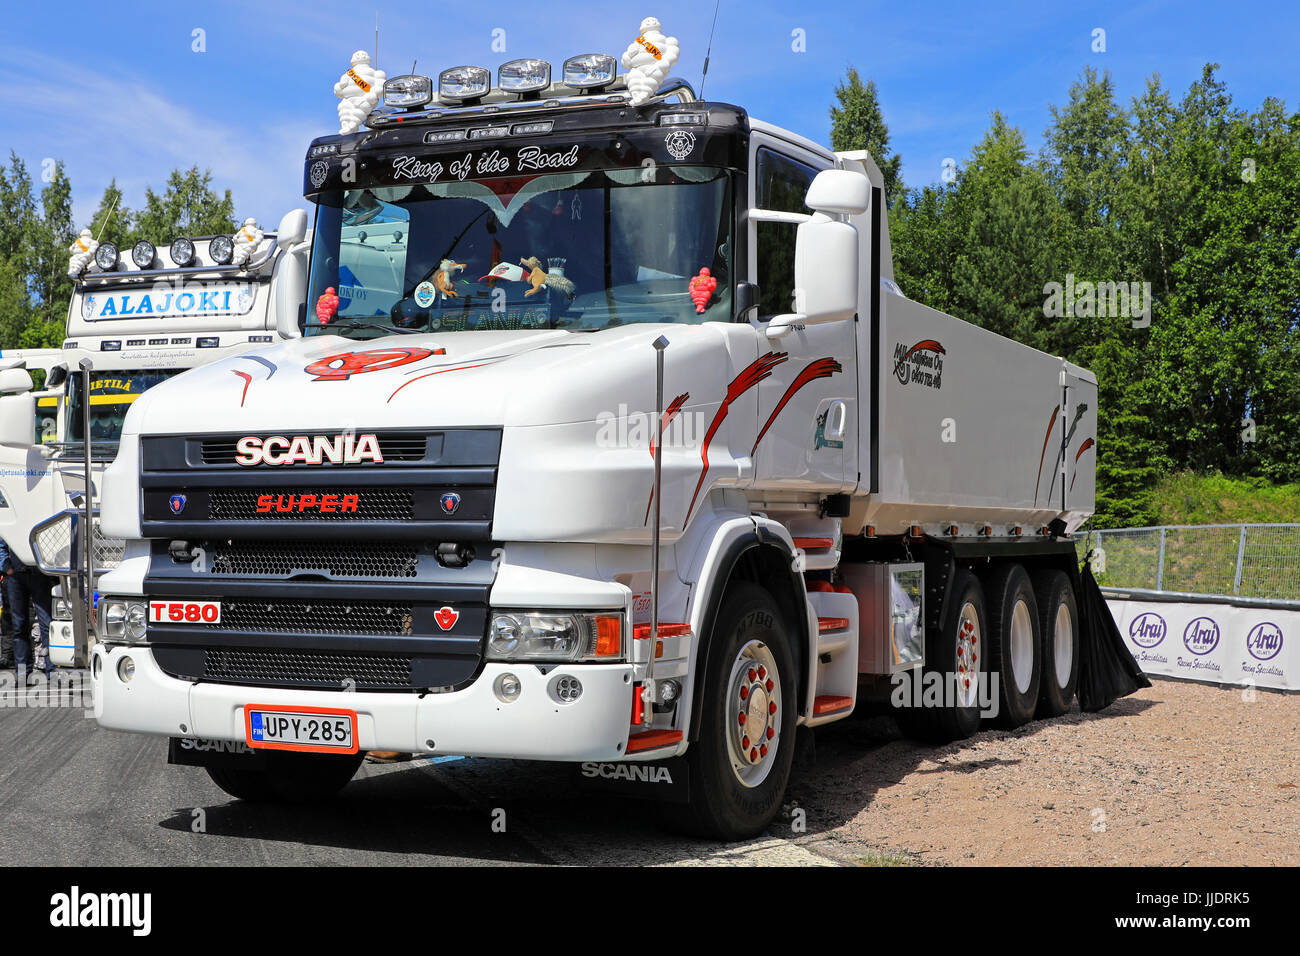 HAMEENLINNA, FINLAND - JULY 15, 2017: Customized white Super Scania T580 tipper truck of MJL Kuljetus Oy on display on Tawastia Truck Weekend 2017. Stock Photo